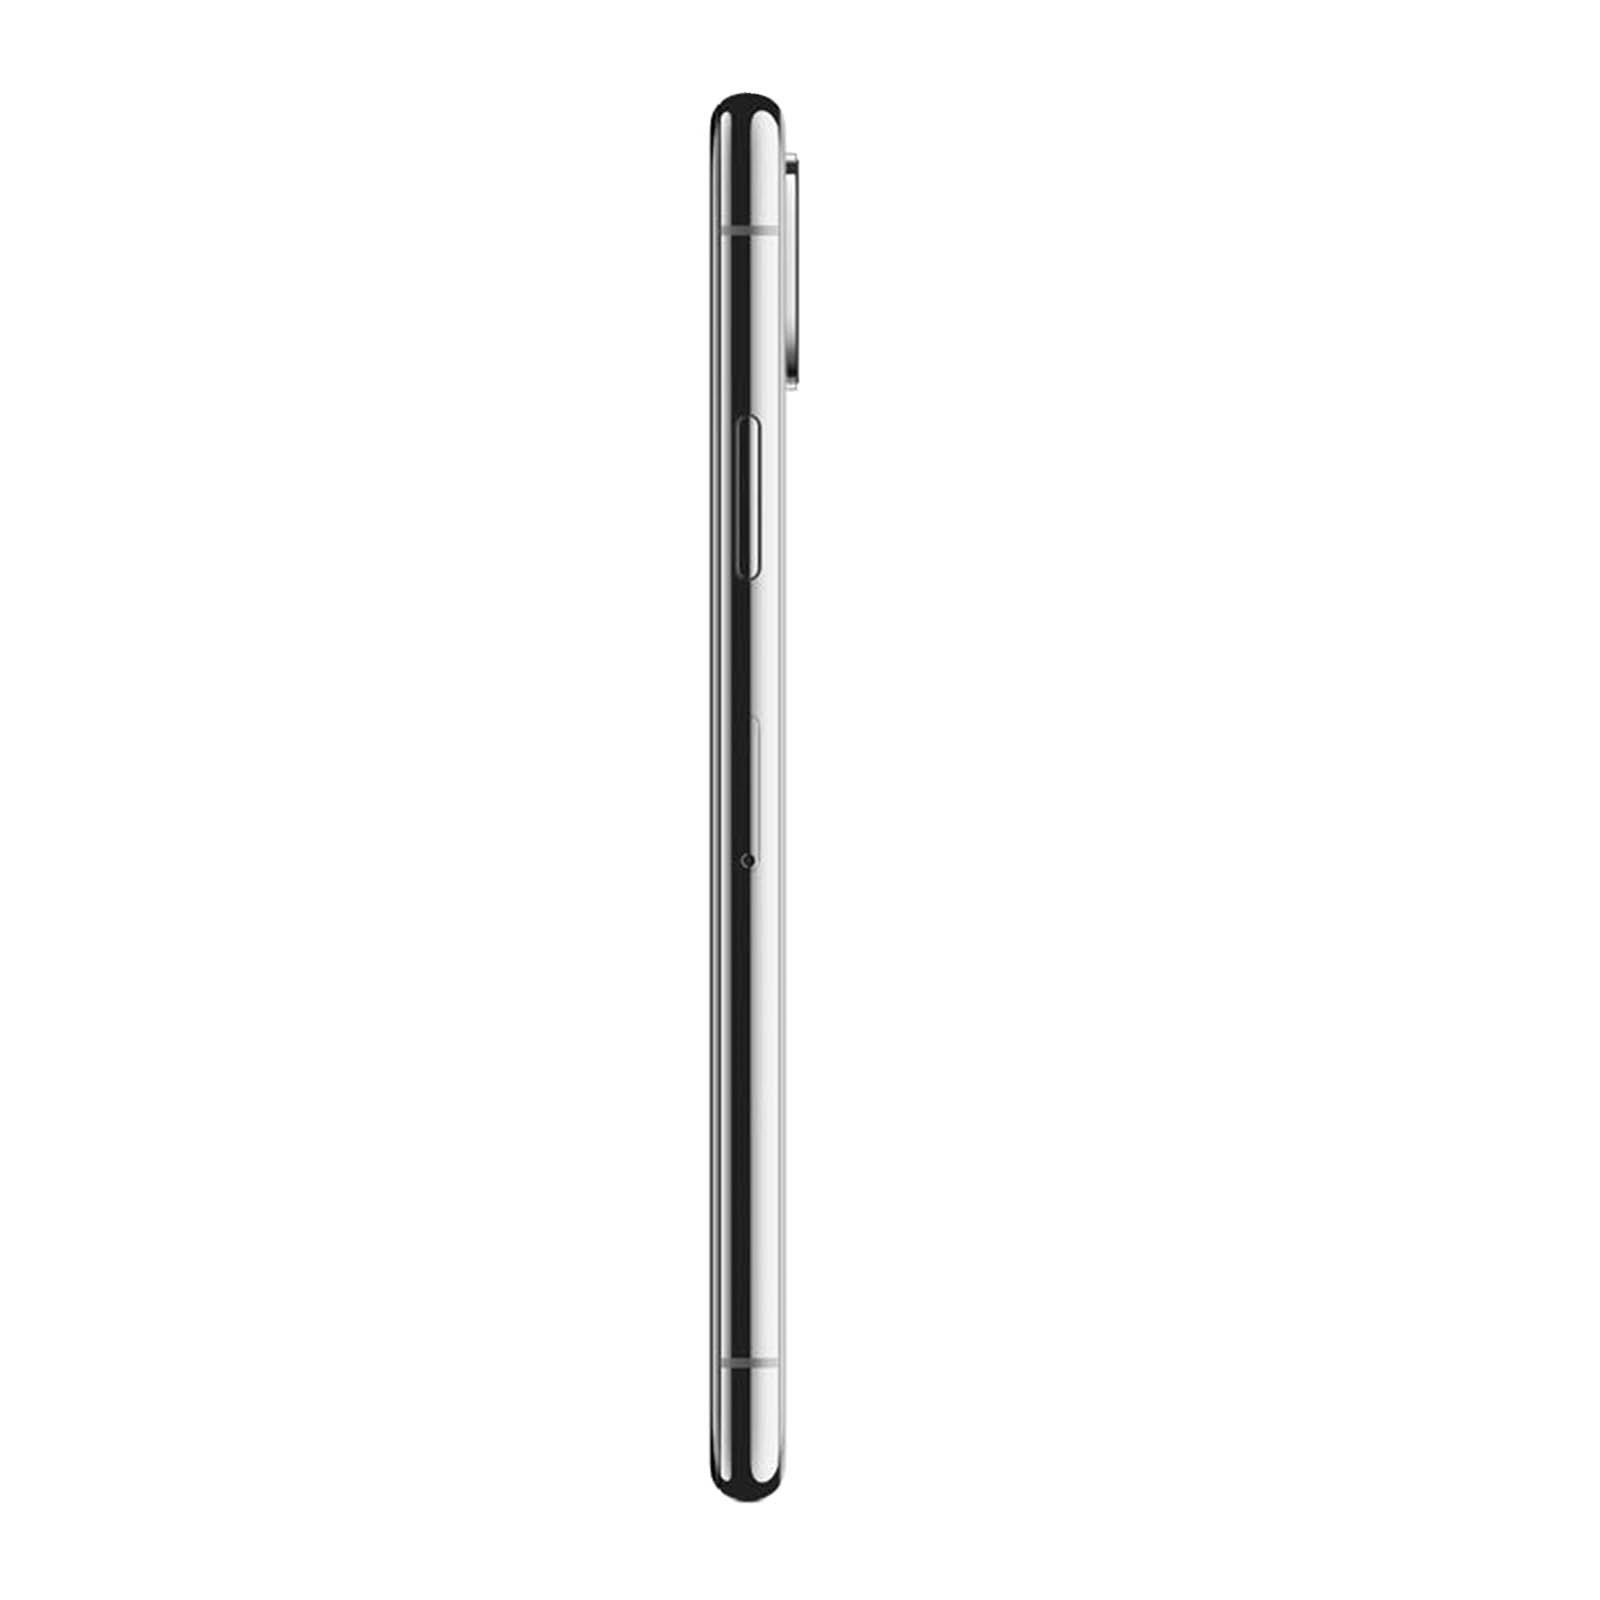 Apple iPhone XS Max 256GB Silver Very Good - Unlocked